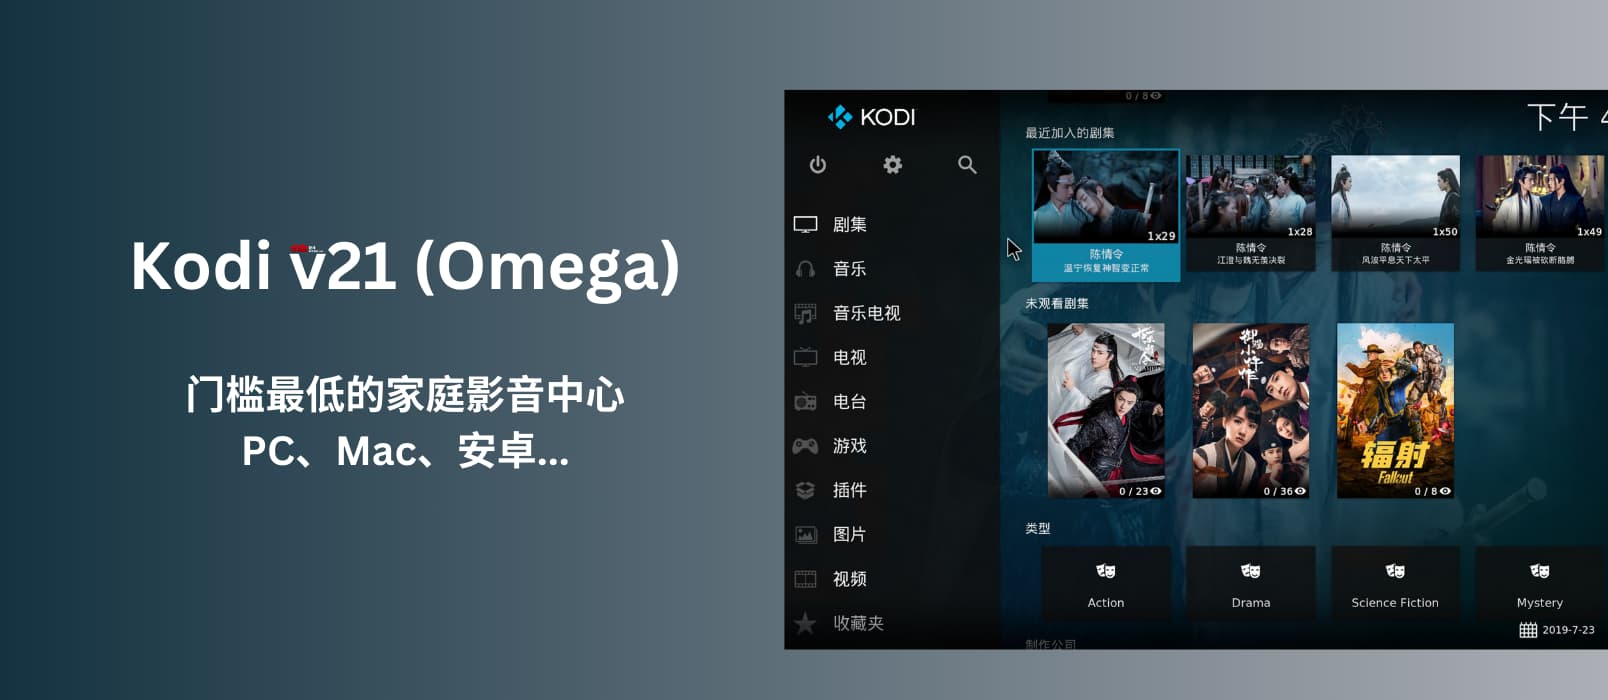 Kodi v21 (Omega)发布，可能是门槛最低的家庭影音中心：集中一处播放本地视频、海报墙、自动刮削、字幕